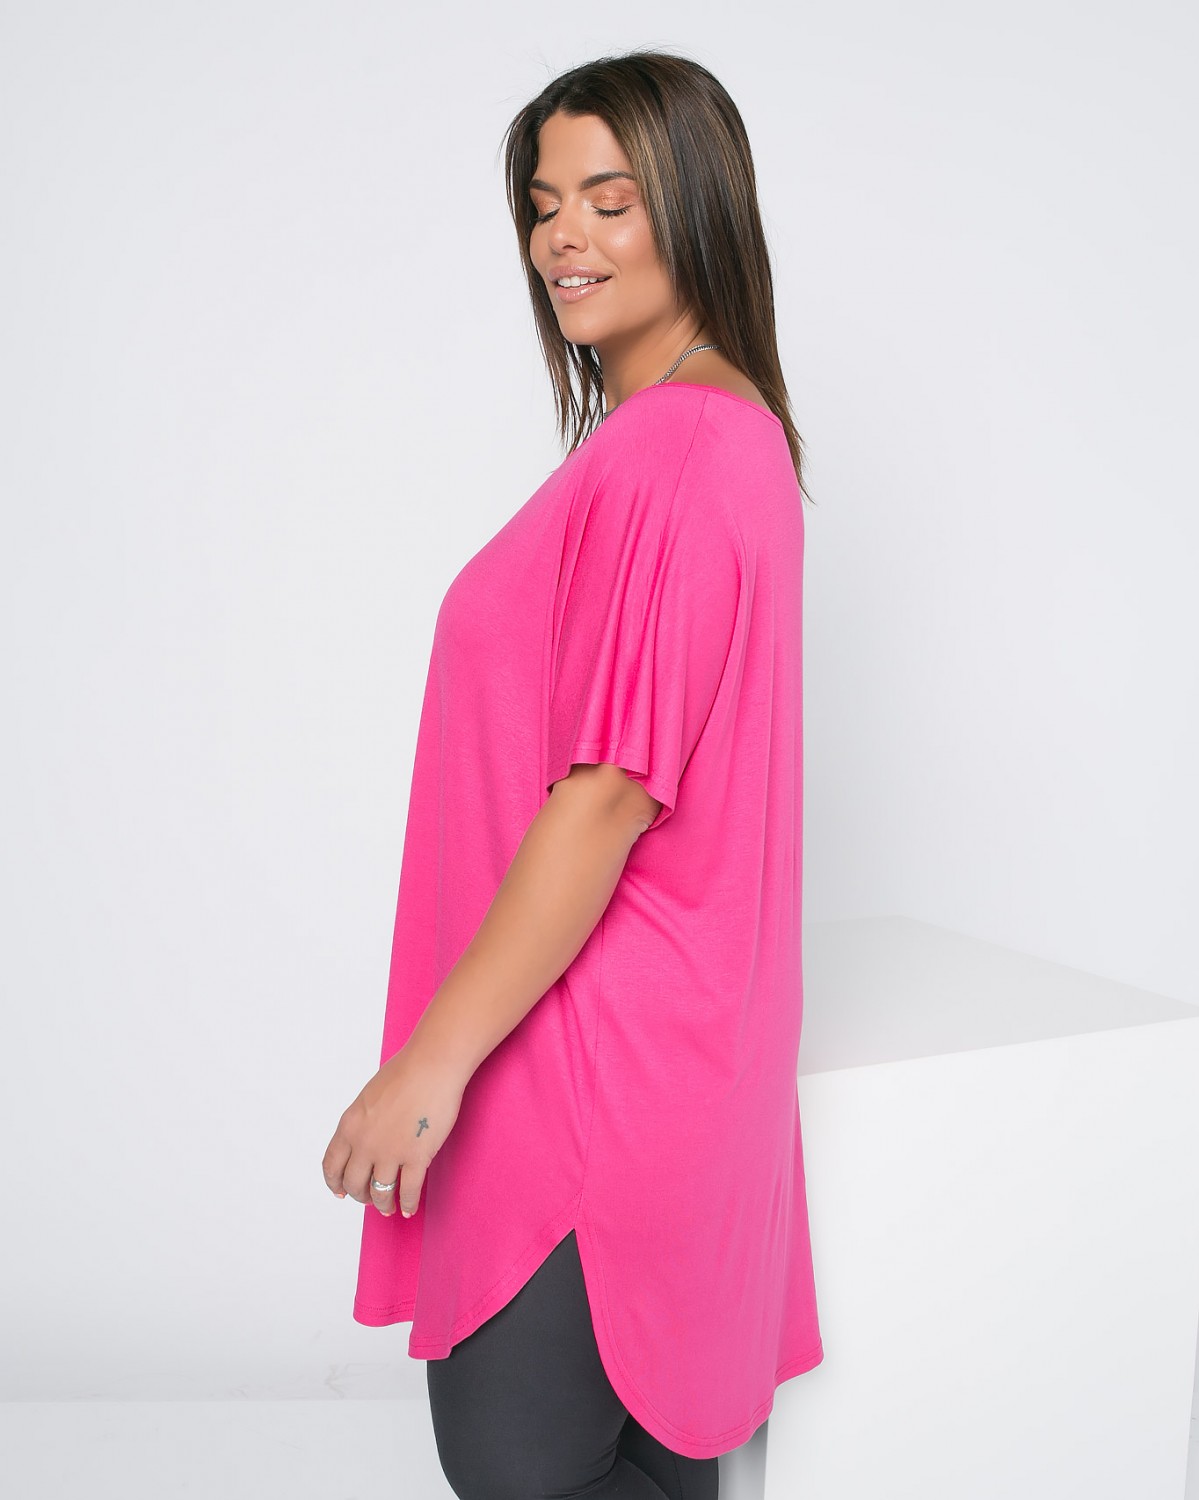 Elise Τ-Shirt, kolor hot pink